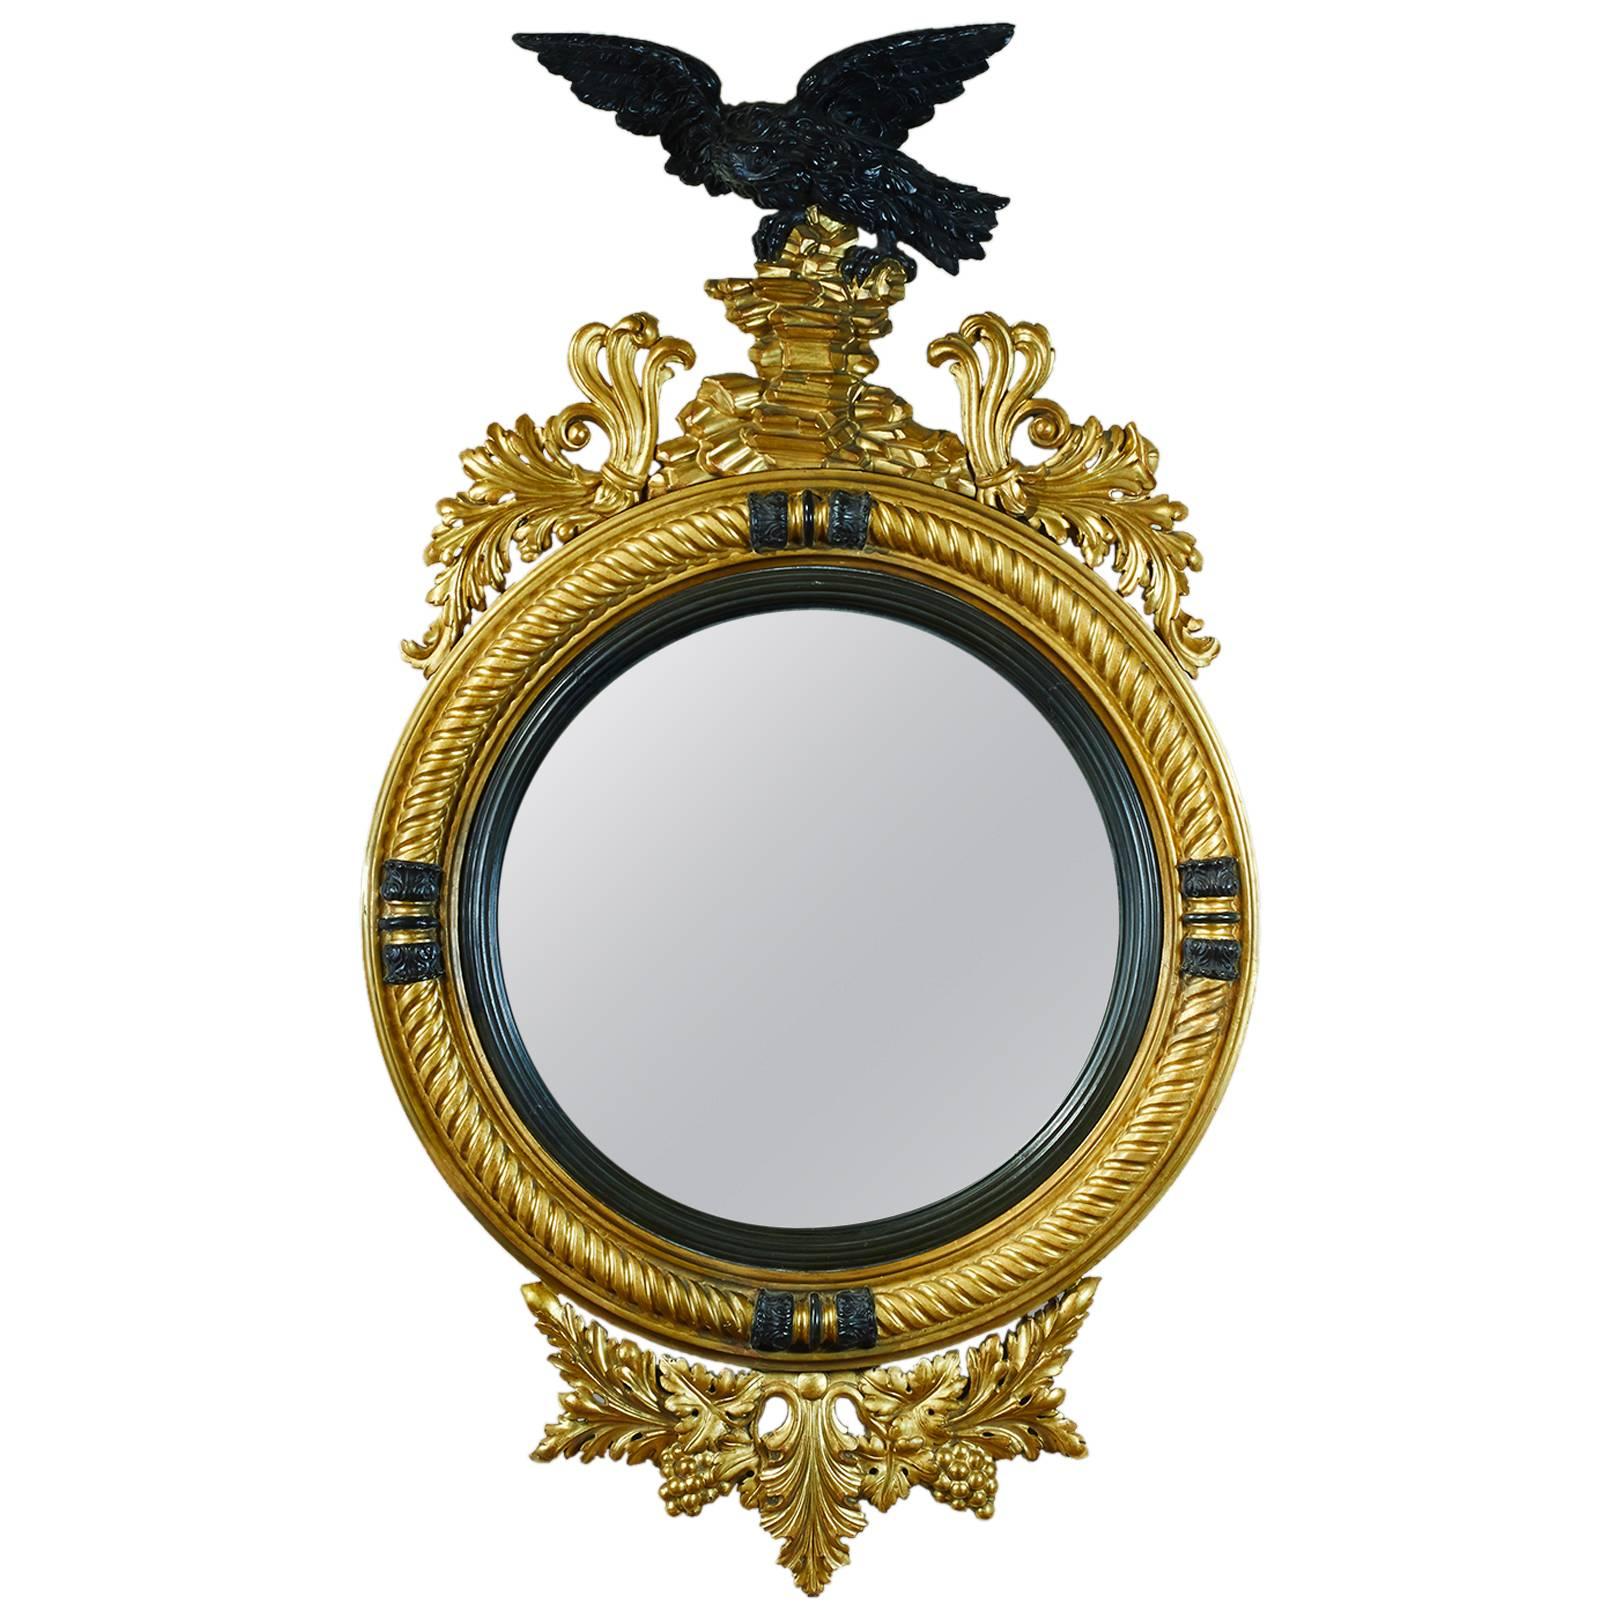 Regency Style Bull's Eye Mirror of Large-Scale